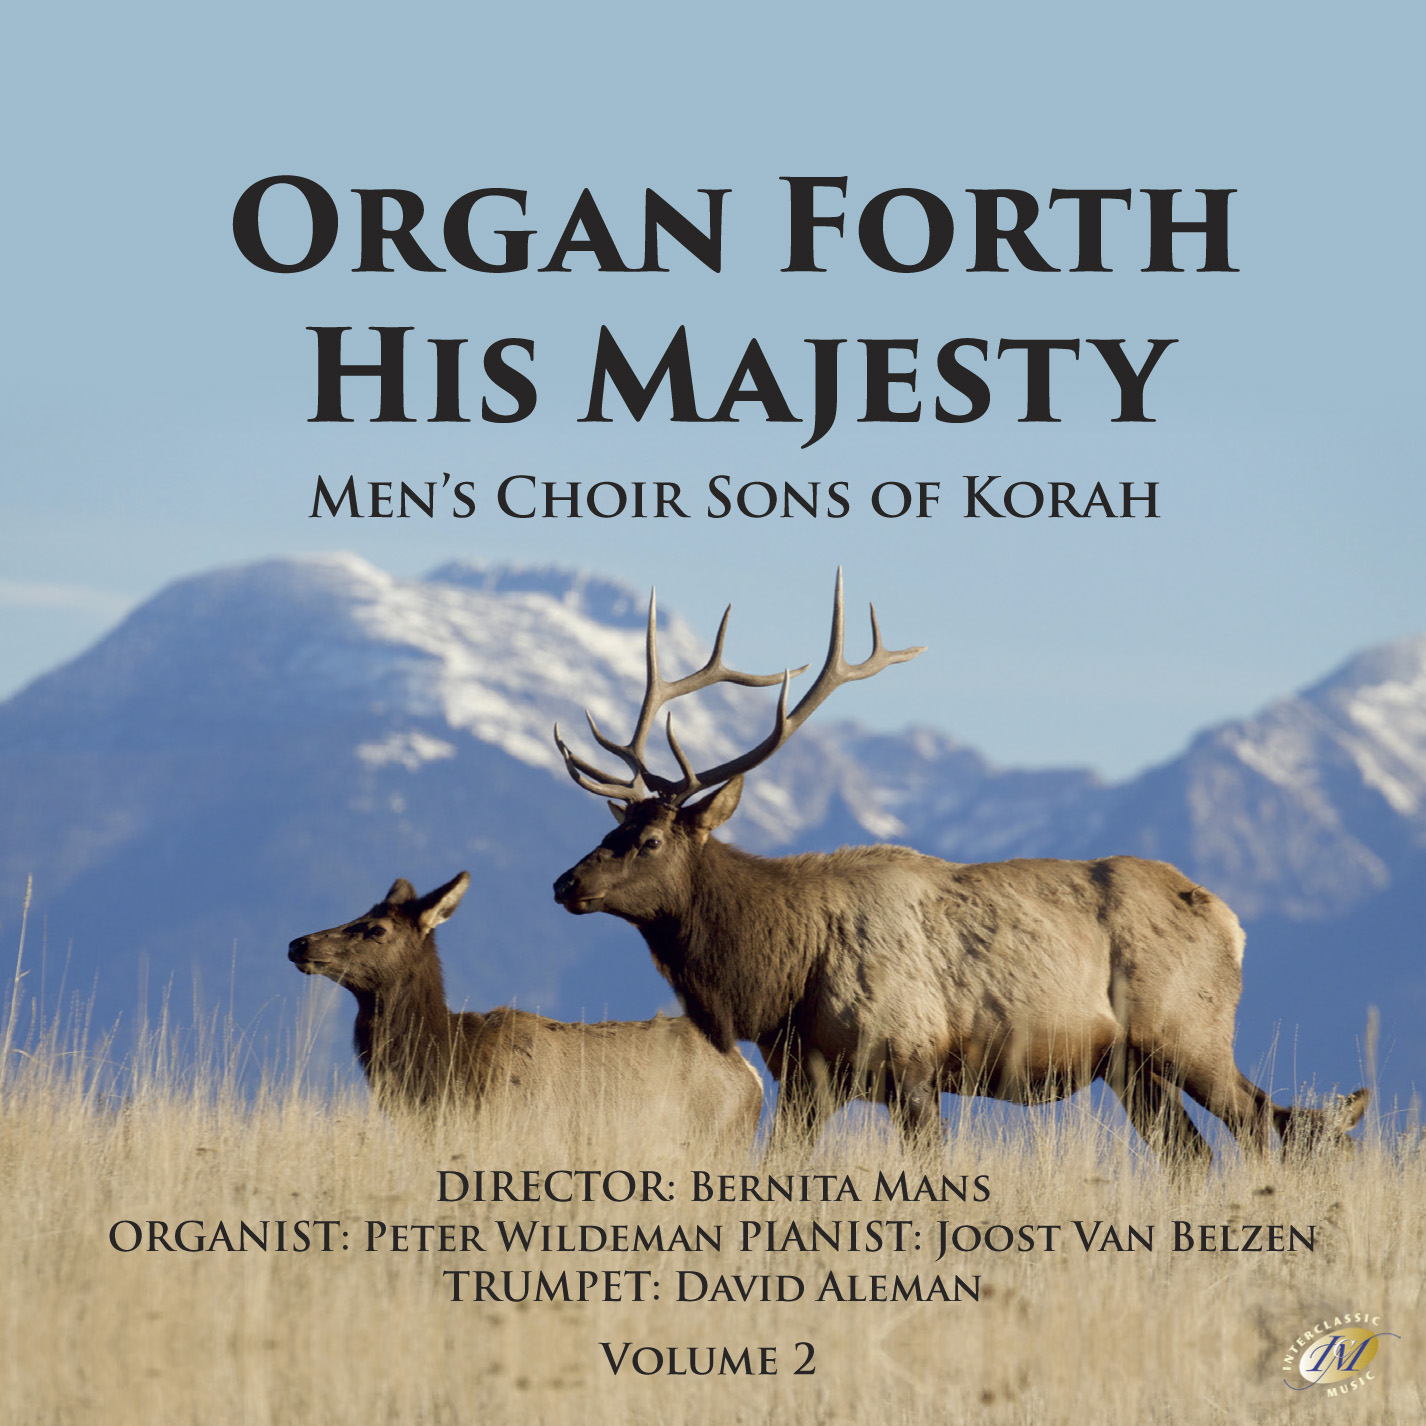 Organ Forth His Majesty